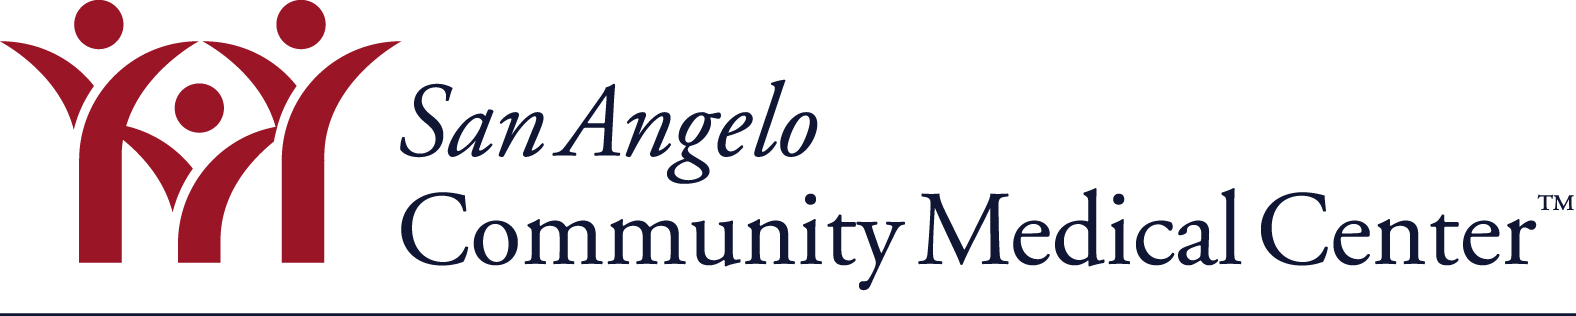 San Angelo Community Medical Center